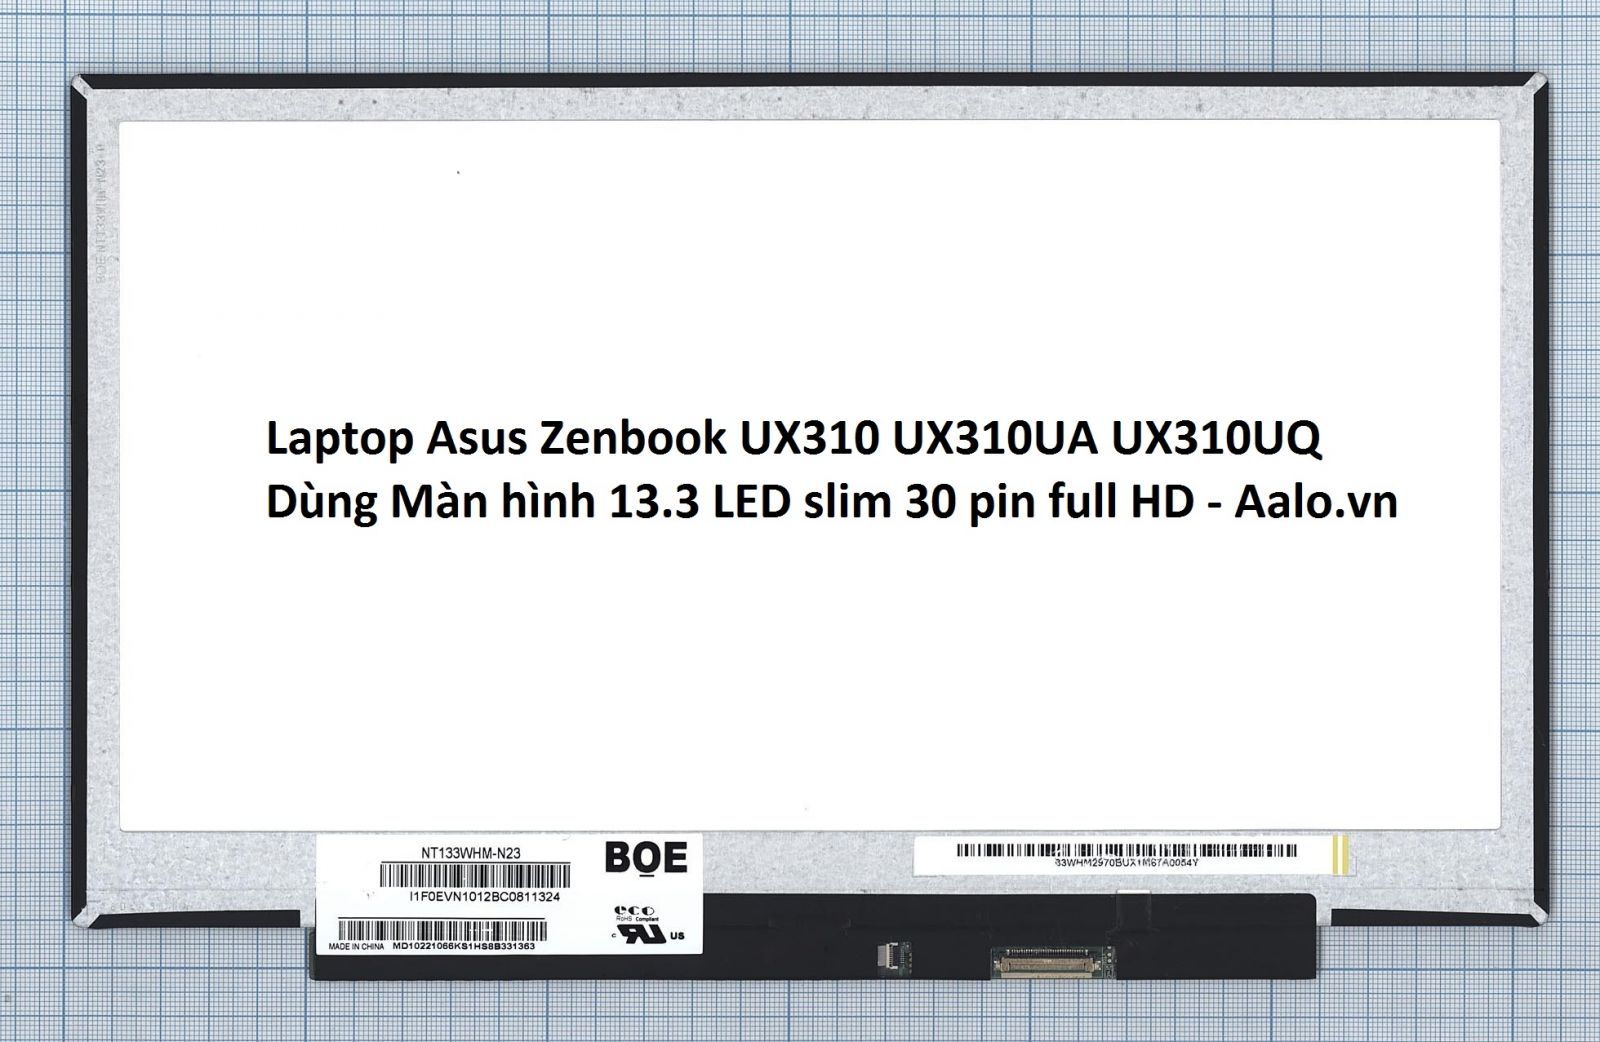 Màn hình Laptop Asus Zenbook UX310 UX310UA UX310UQ - Aalo.vn